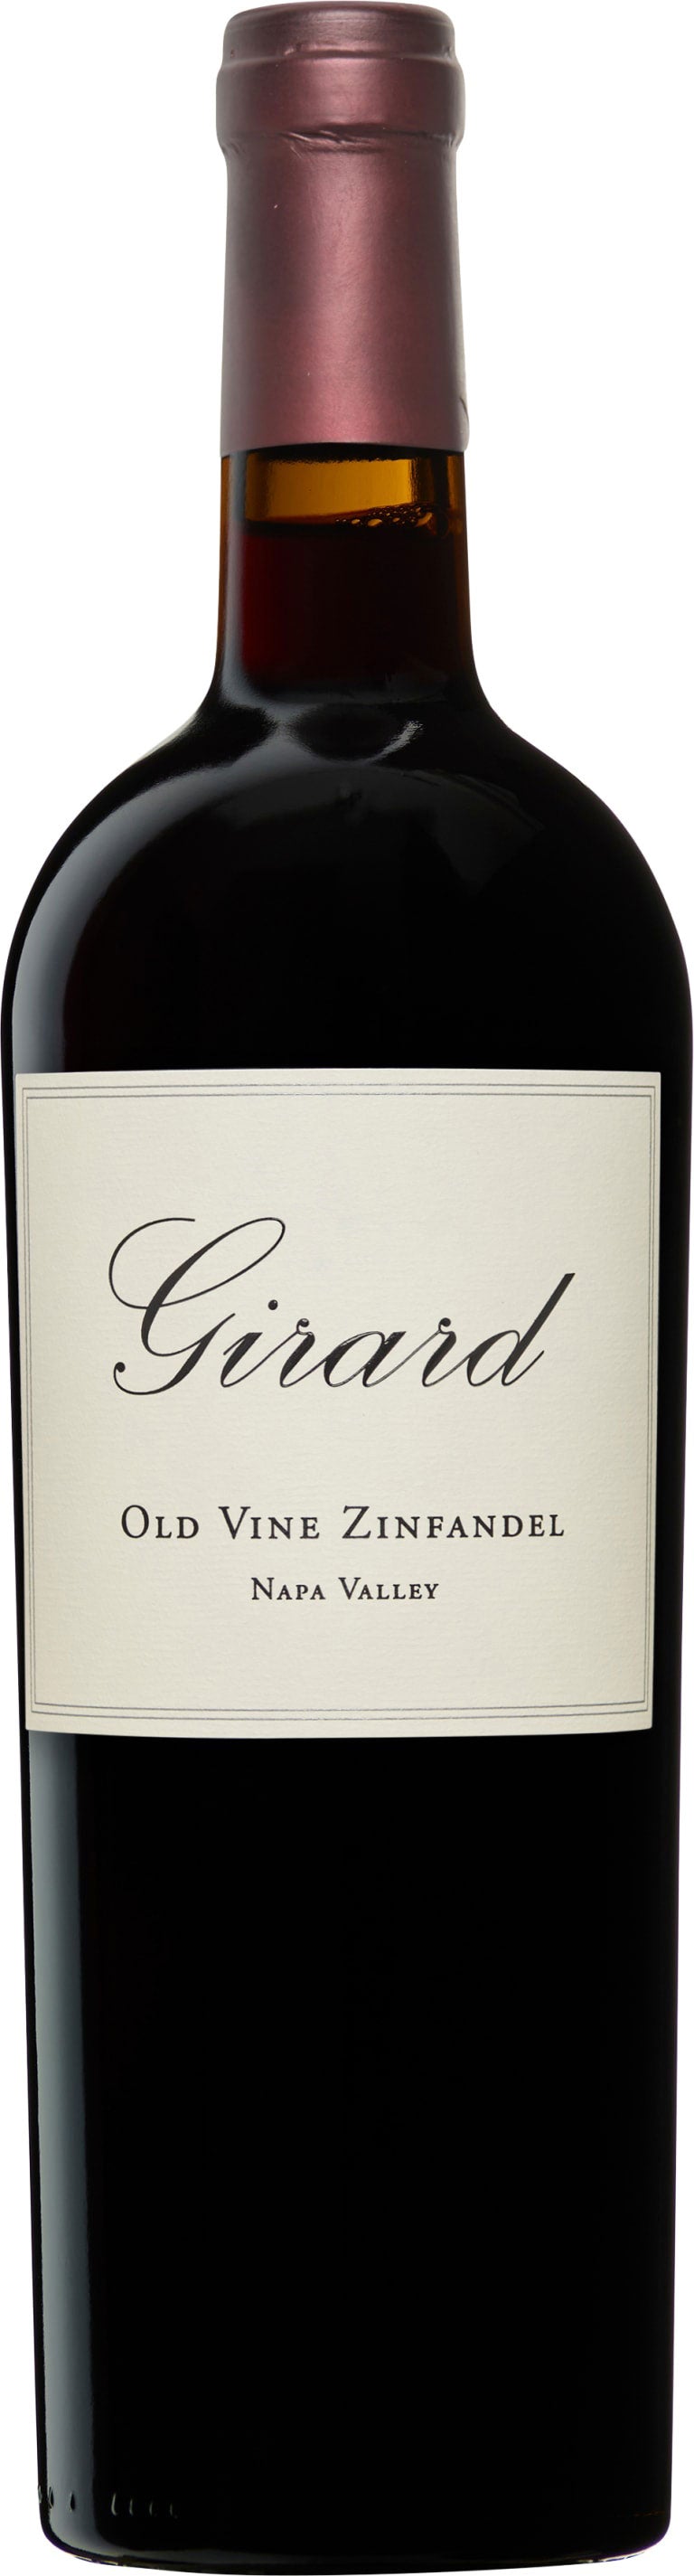 Girard Zinfandel Old Vine 2017